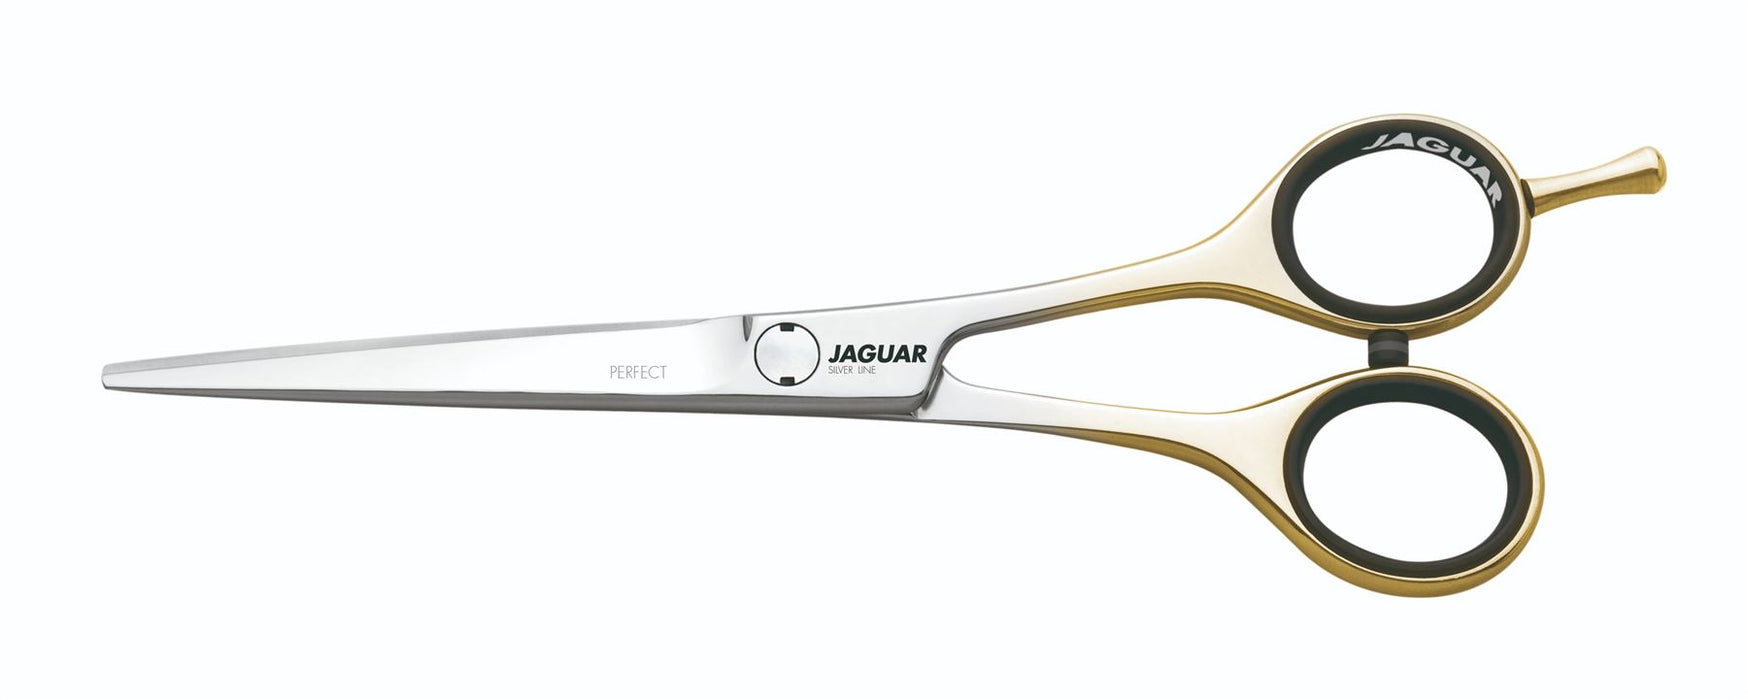 Jaguar Perfect 5.5" Hairdressing Scissors - 22 Gold Carat Plating